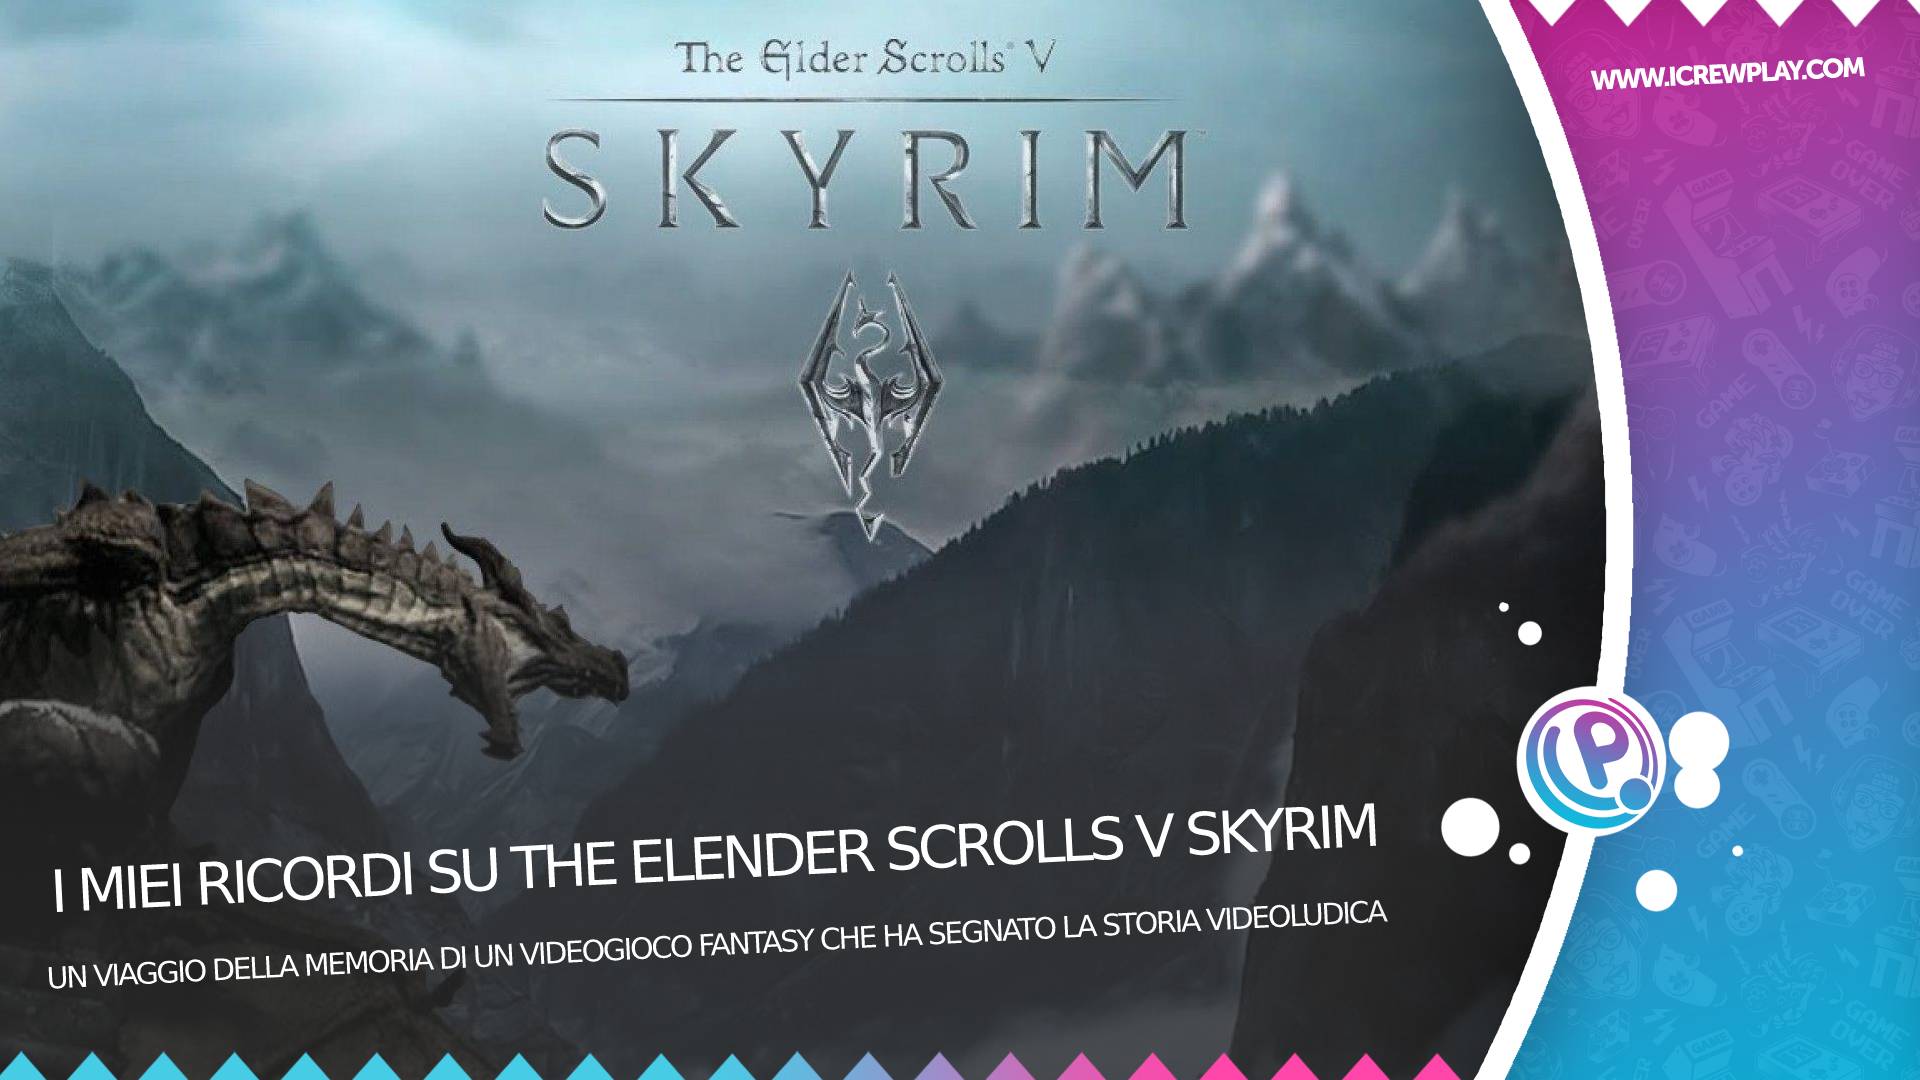 I Miei ricordi su The Elder Scrolls V Skyrim 12